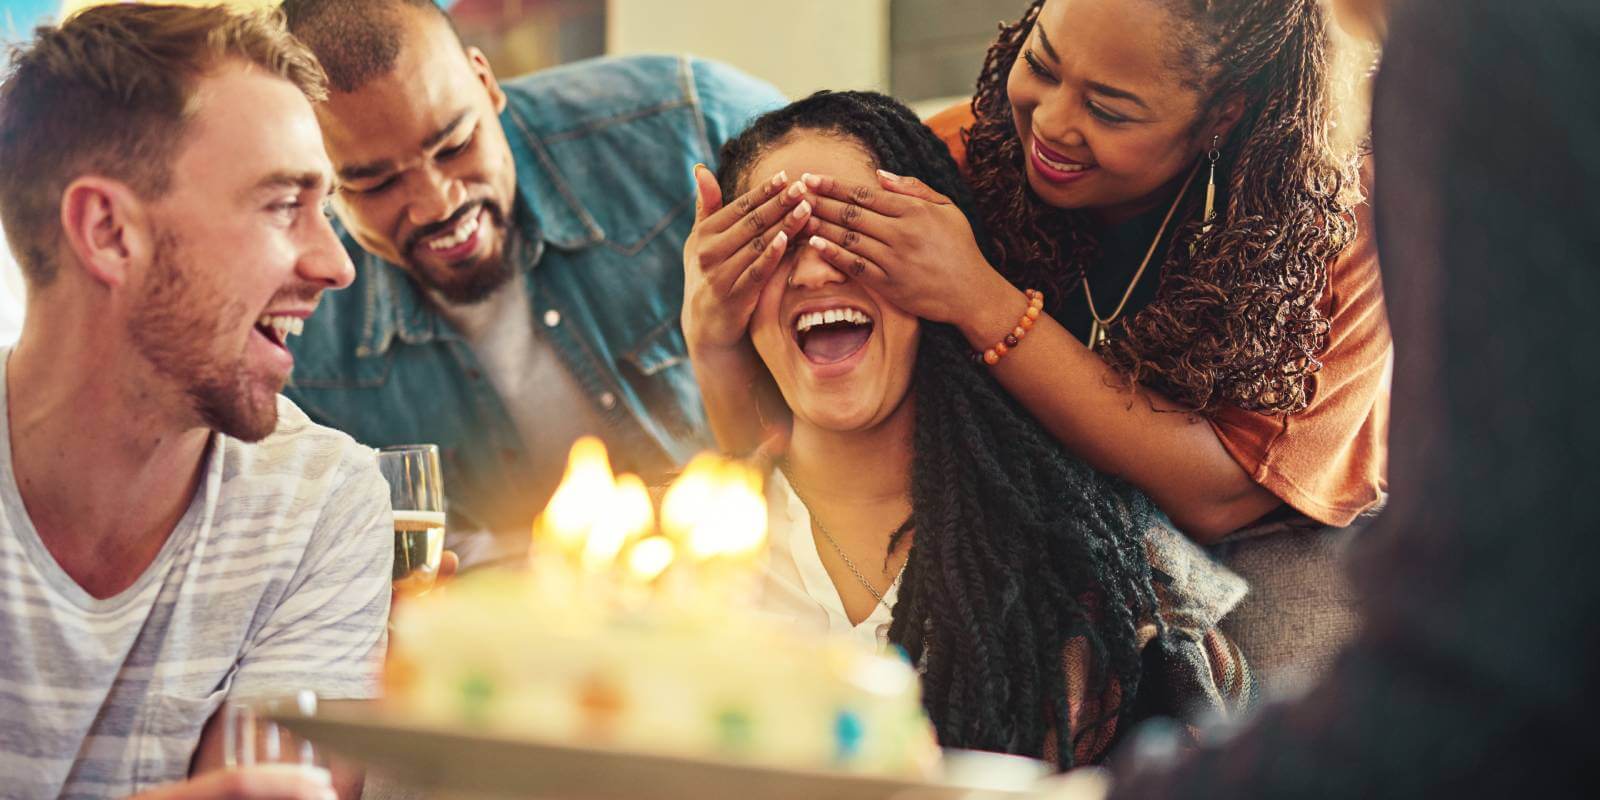 Gifting Guide For Milestone Birthdays